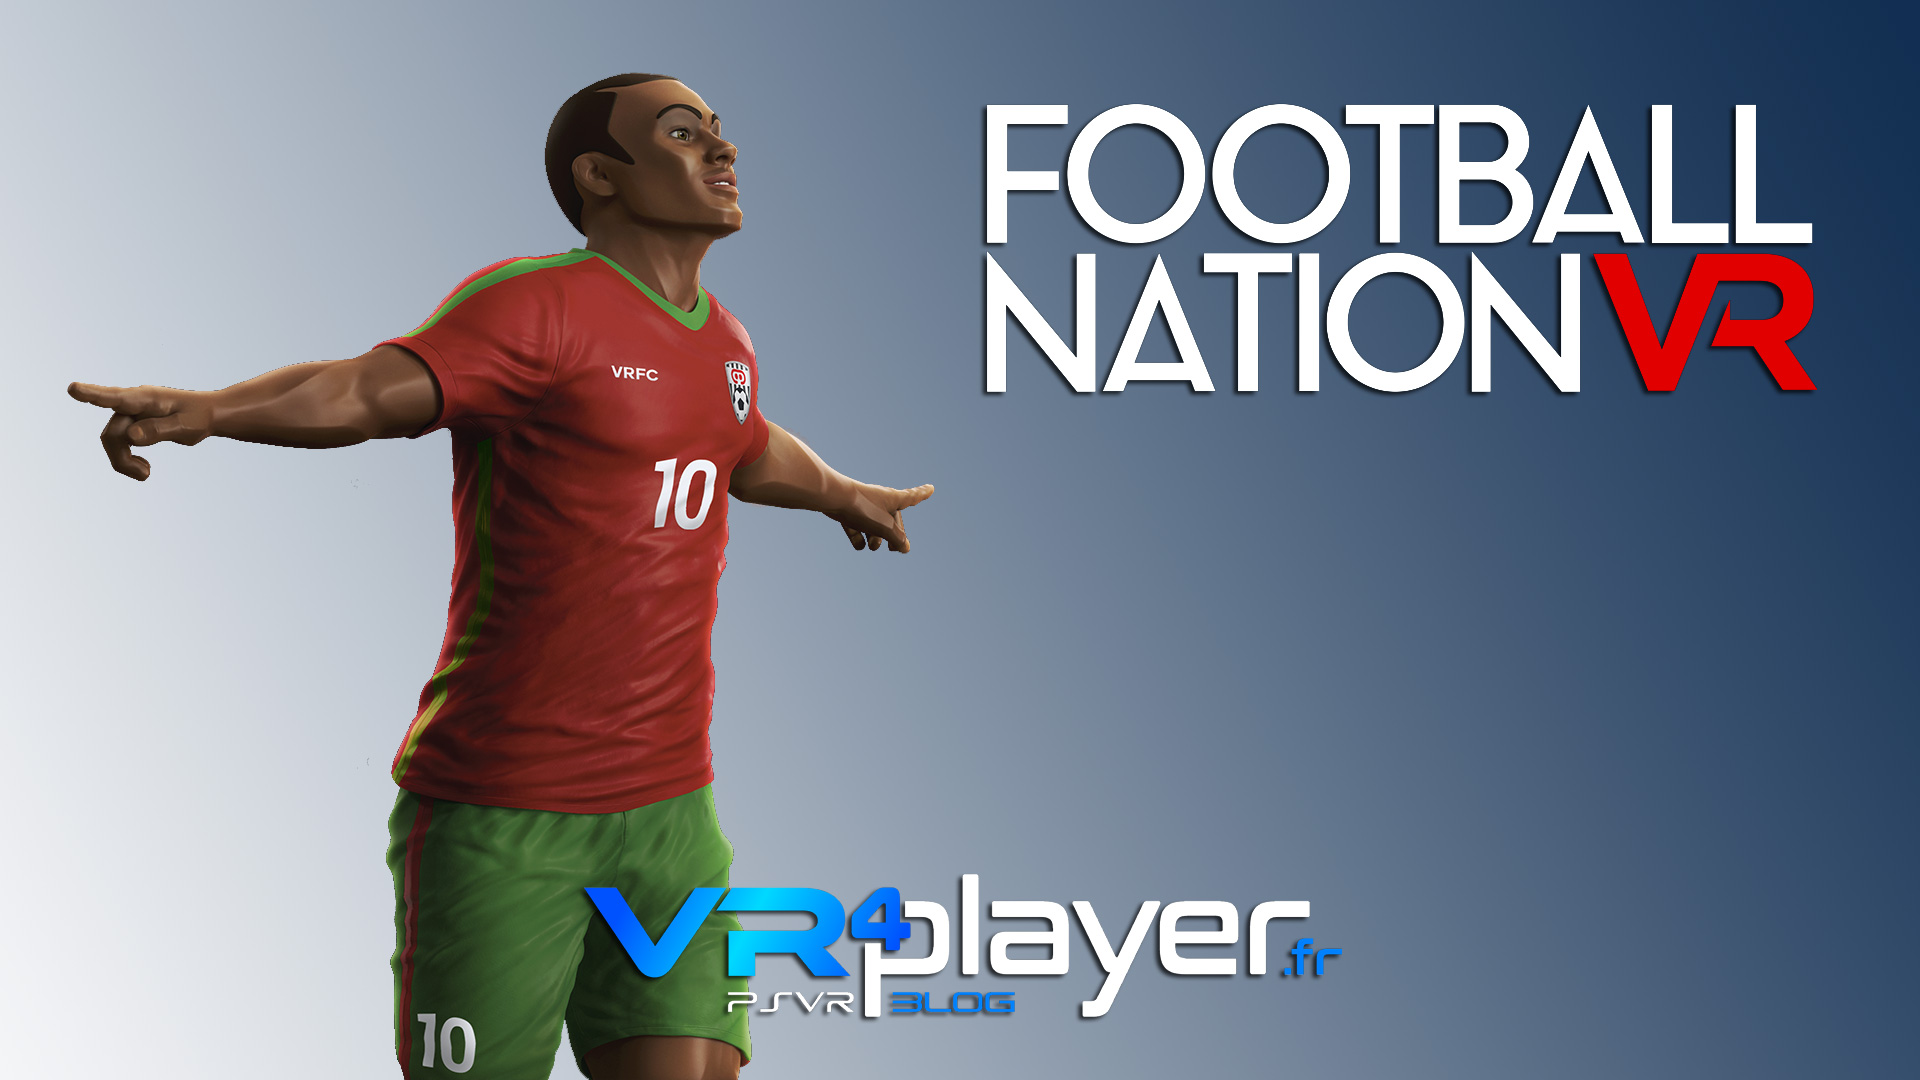 Football Nation VR PSVR vr4player.fr